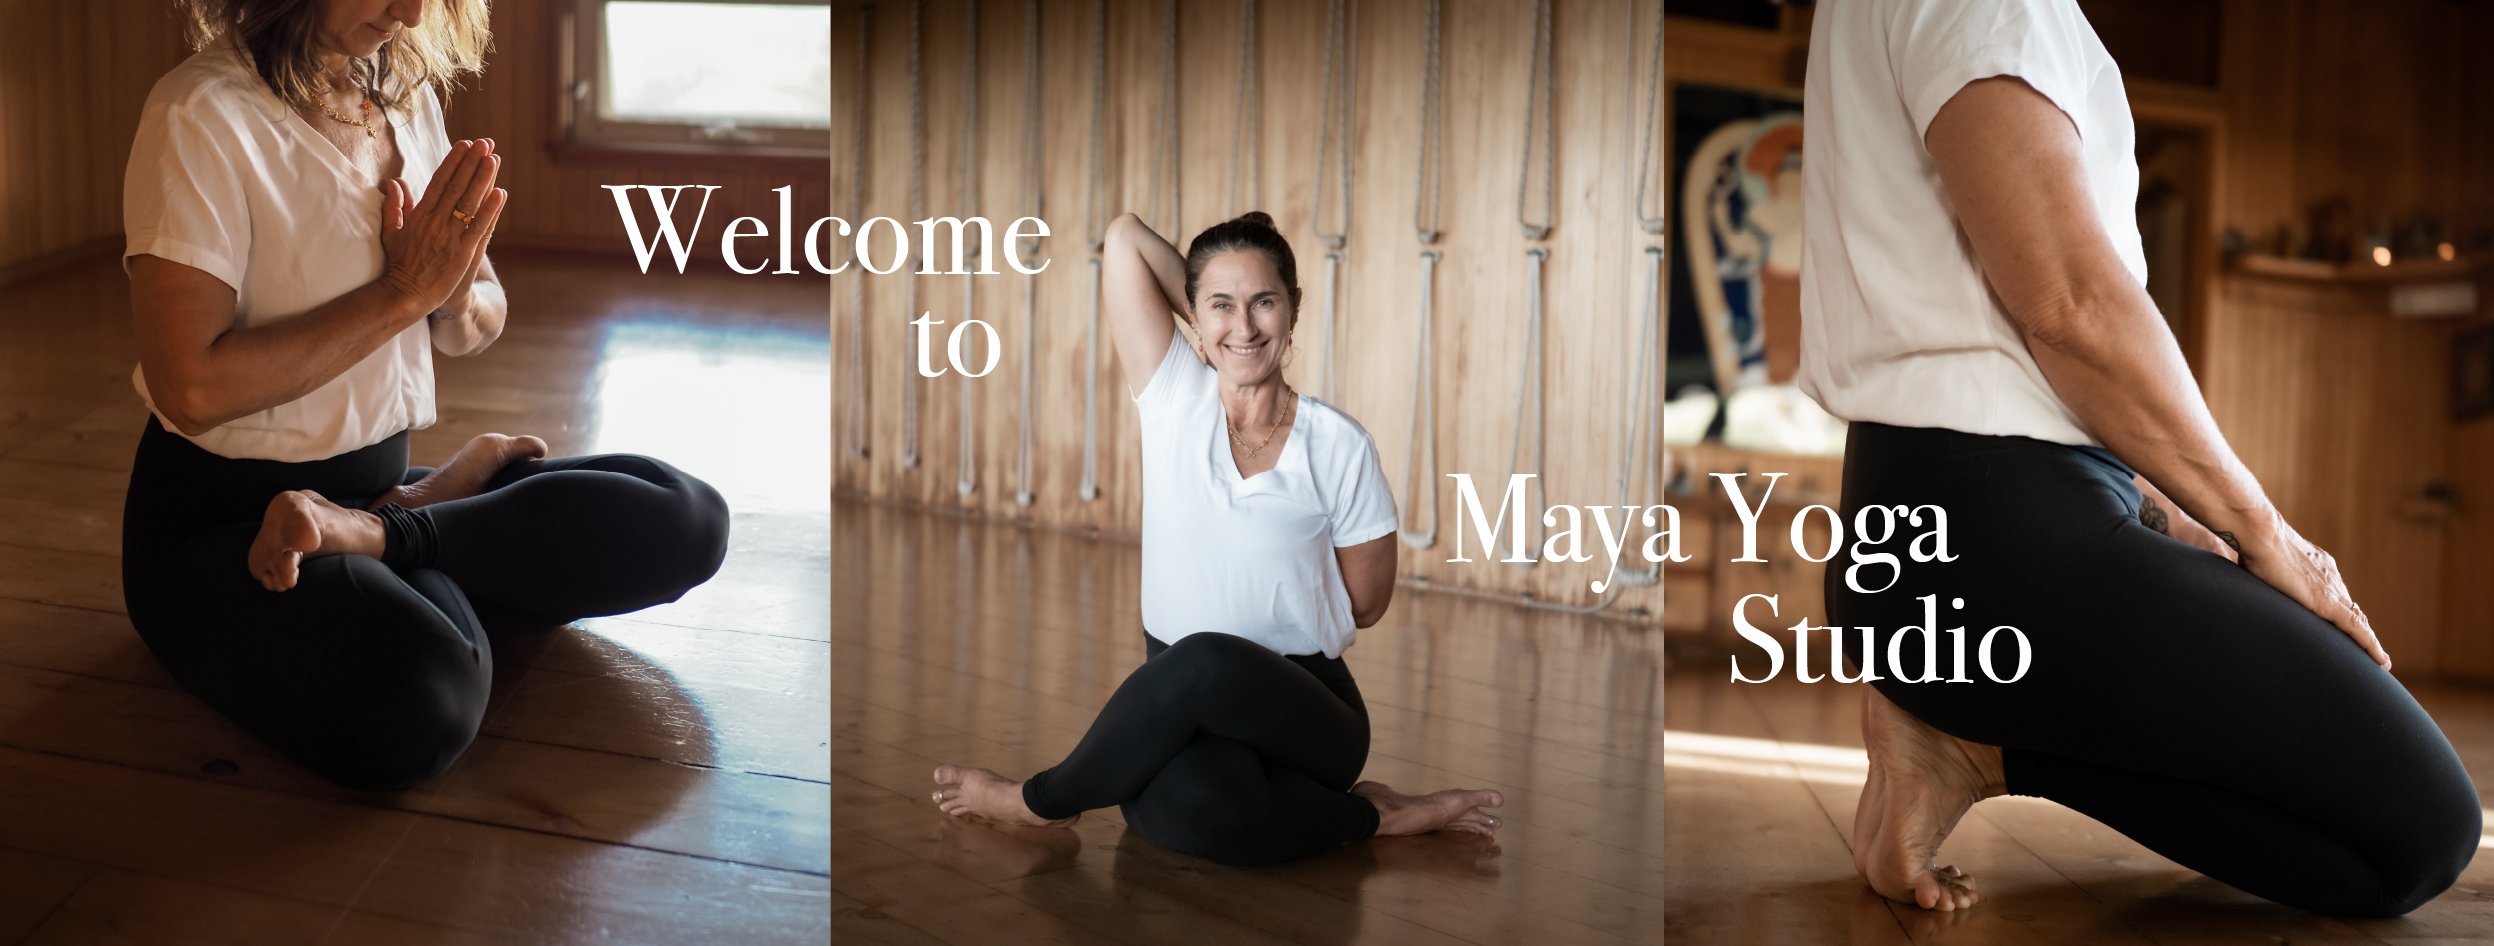 Maya Yoga Studio